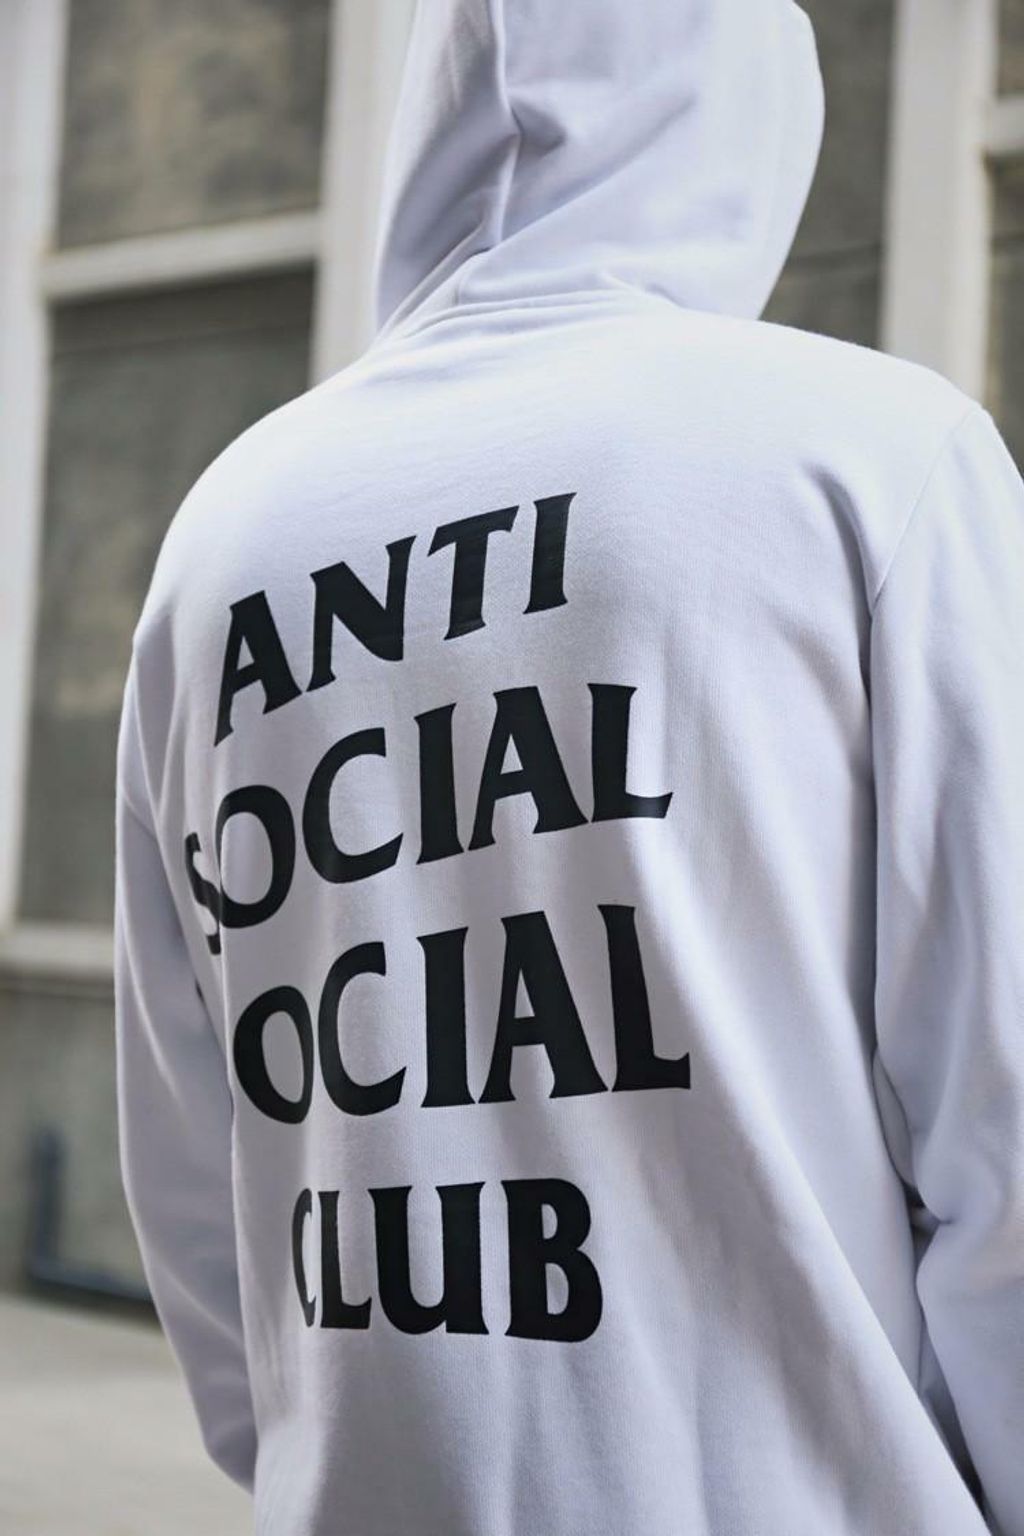 fashion-street-wear-famous-brand-anti-social-social-club-men-hoodies-sweatshirts-kanya-west-men-hoodies-anti-social-social-club (1).jpg